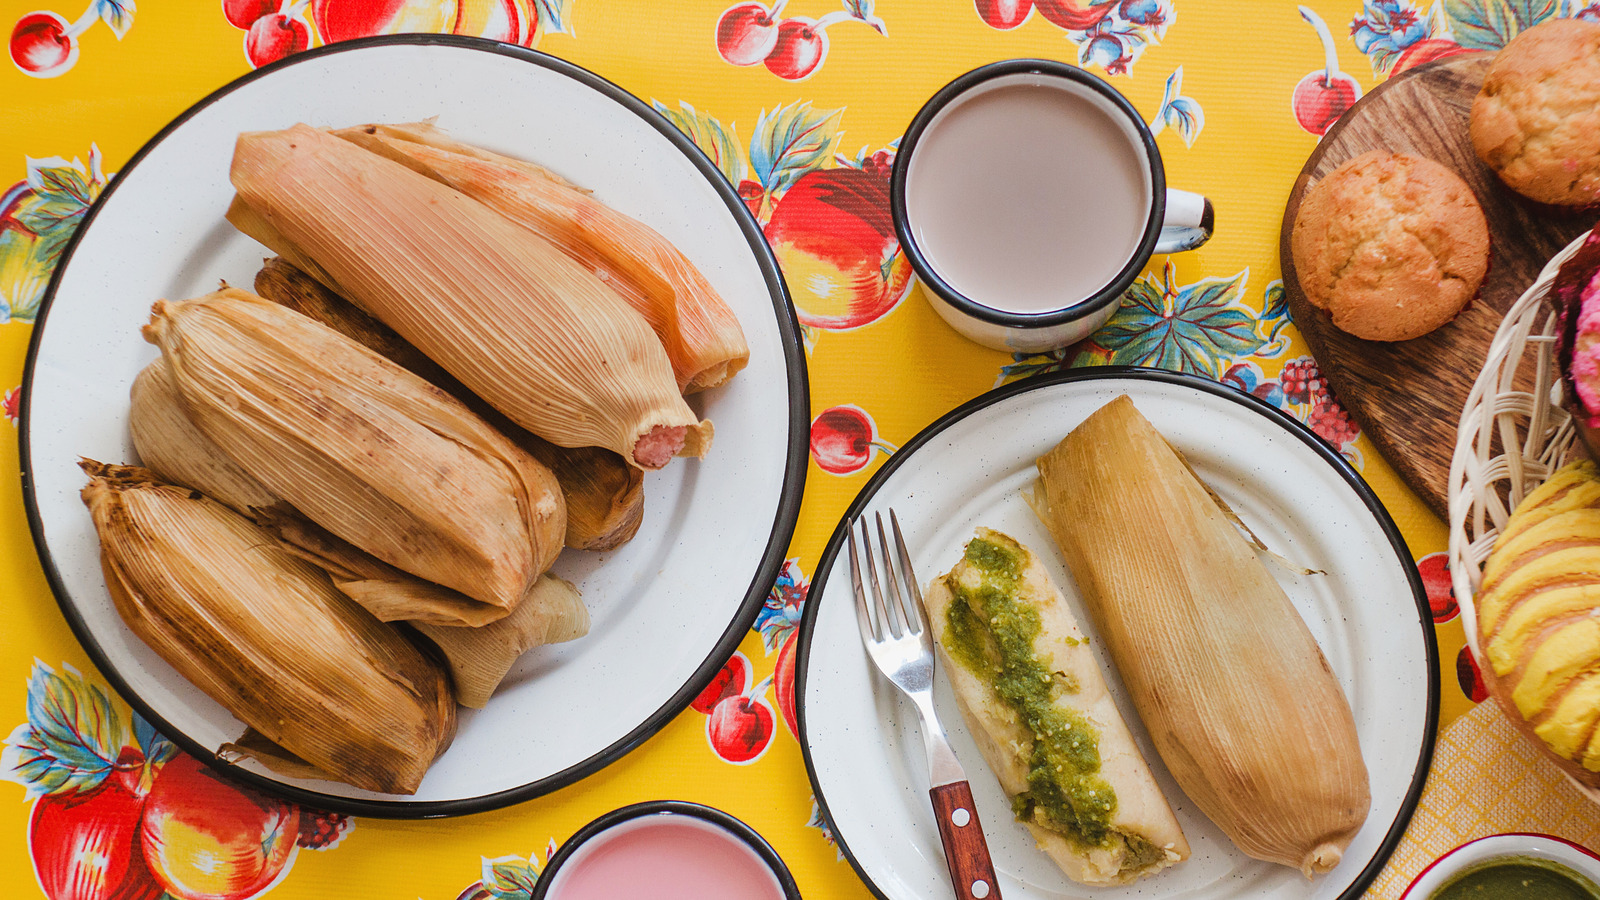 https://www.tastingtable.com/img/gallery/the-absolute-best-ways-to-reheat-tamales/l-intro-1651600101.jpg